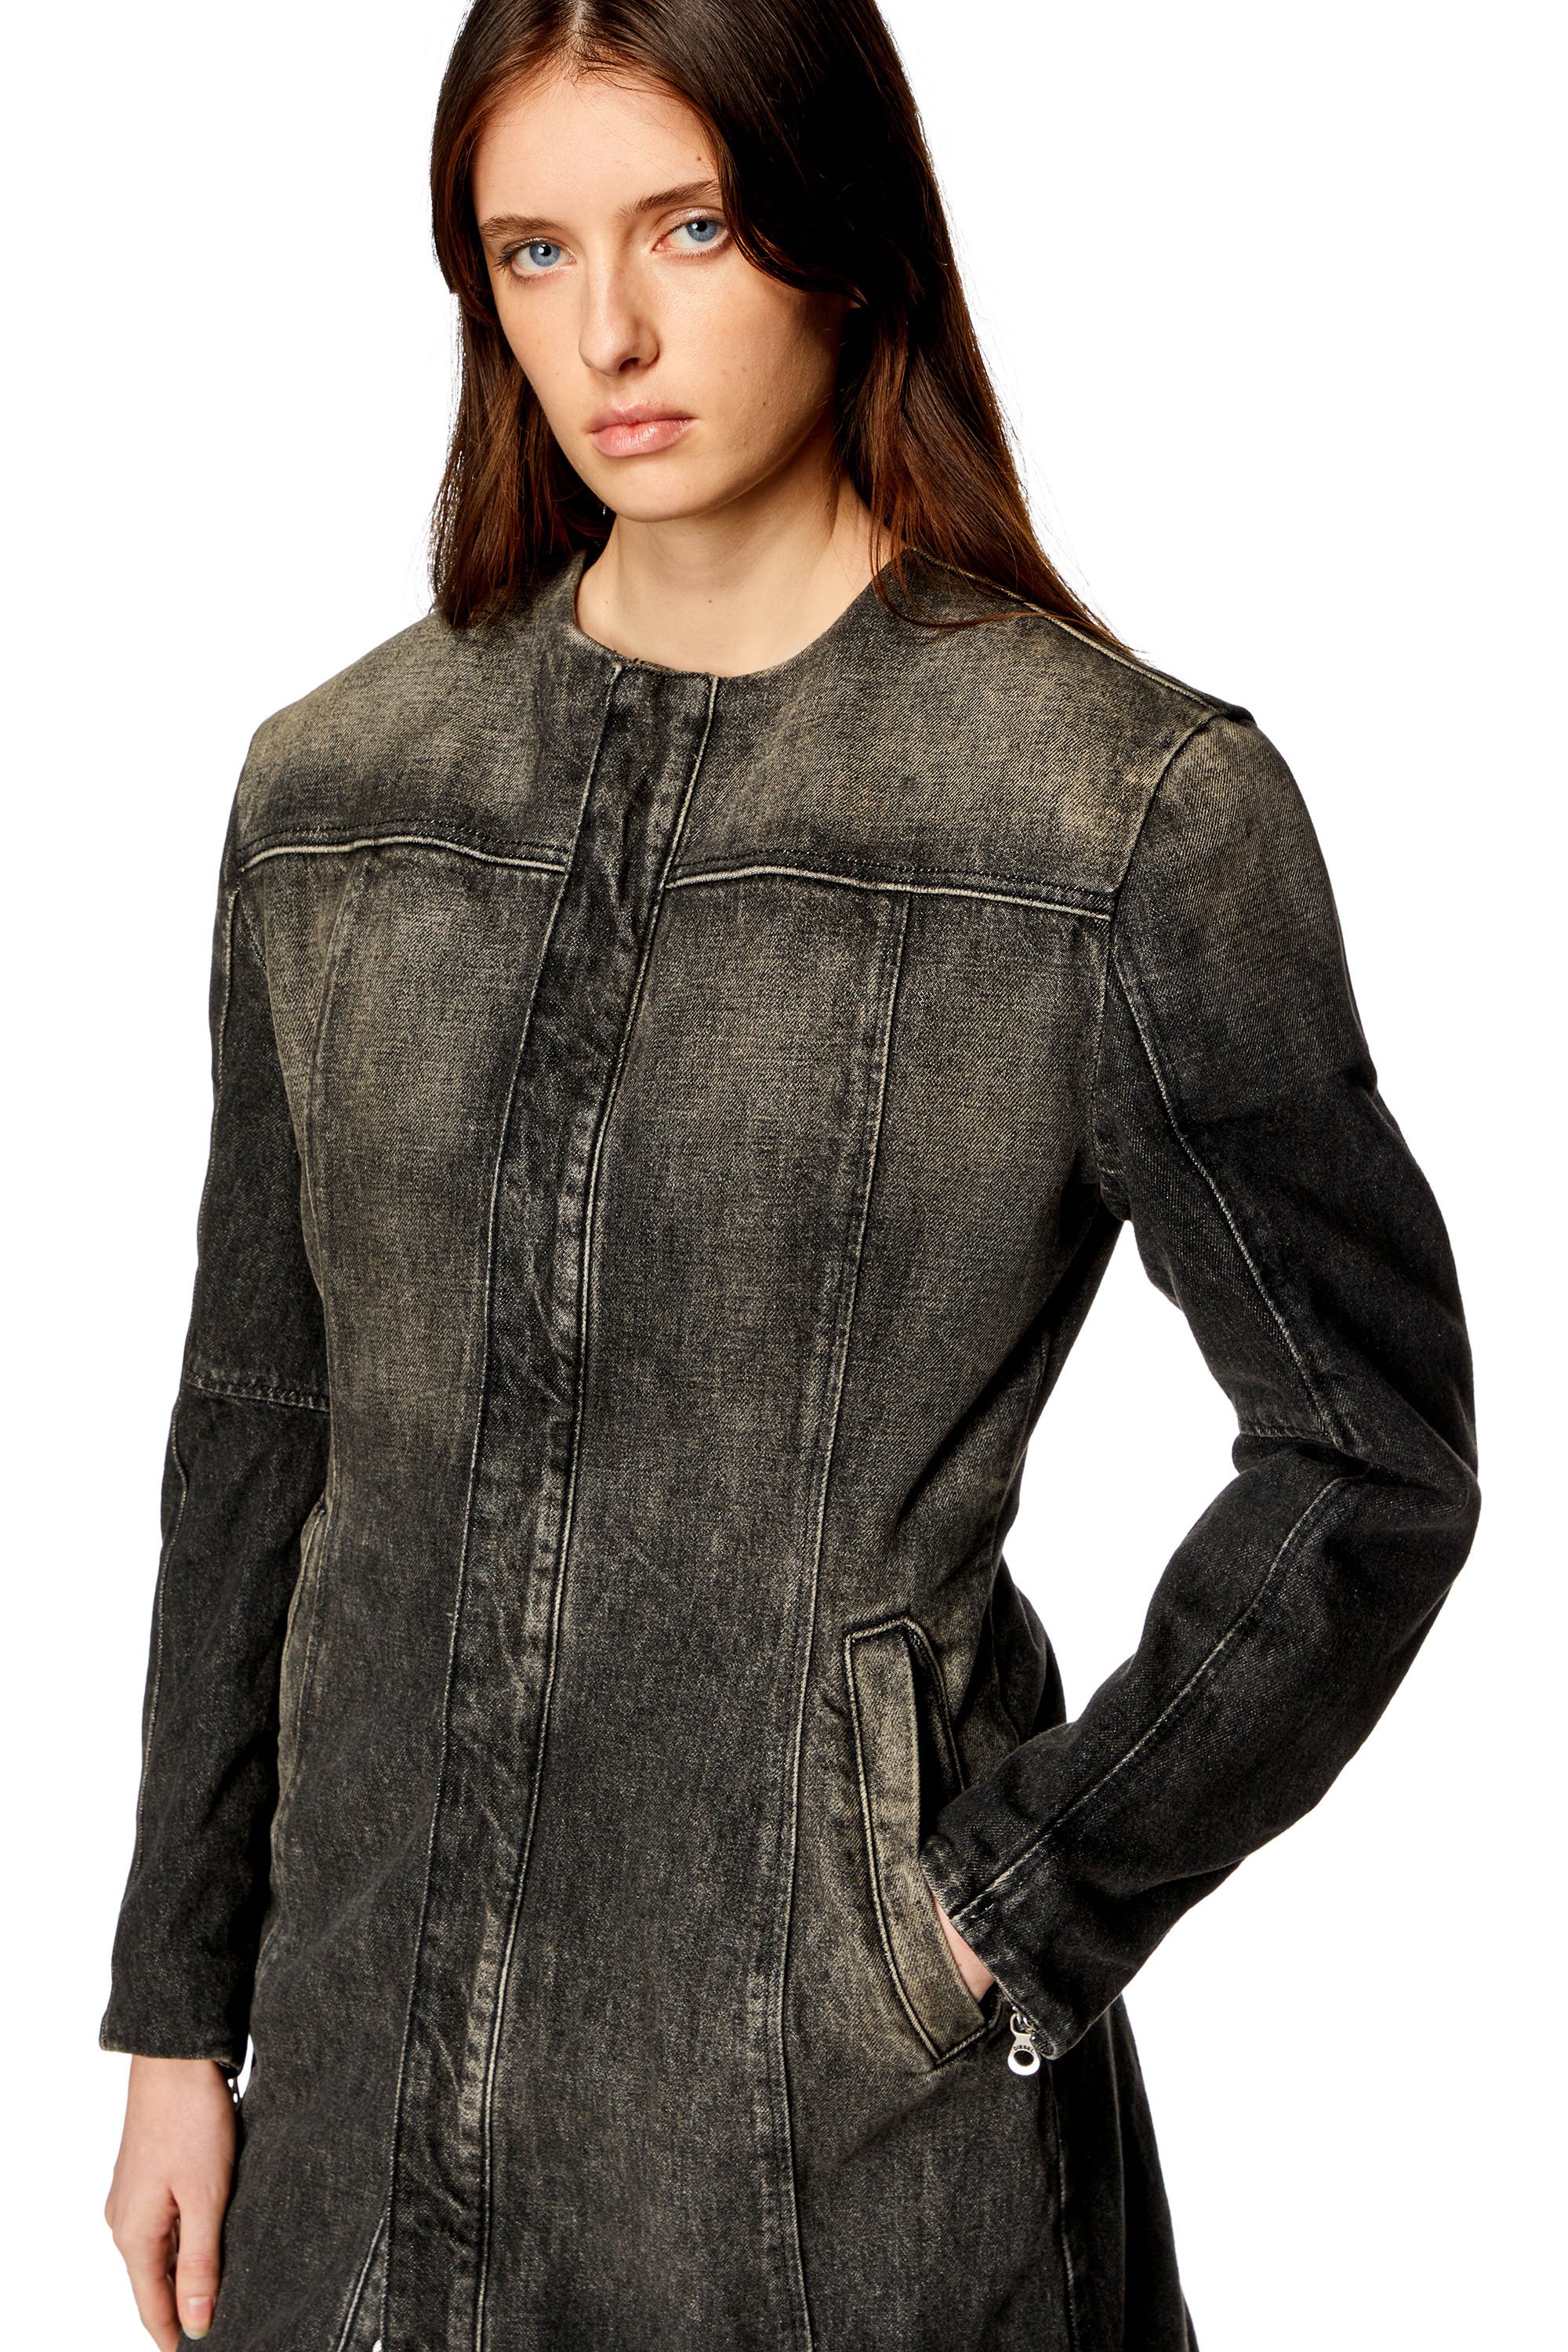 Diesel - DE-SY-S, Woman Denim coat in cotton and hemp in Black - Image 4